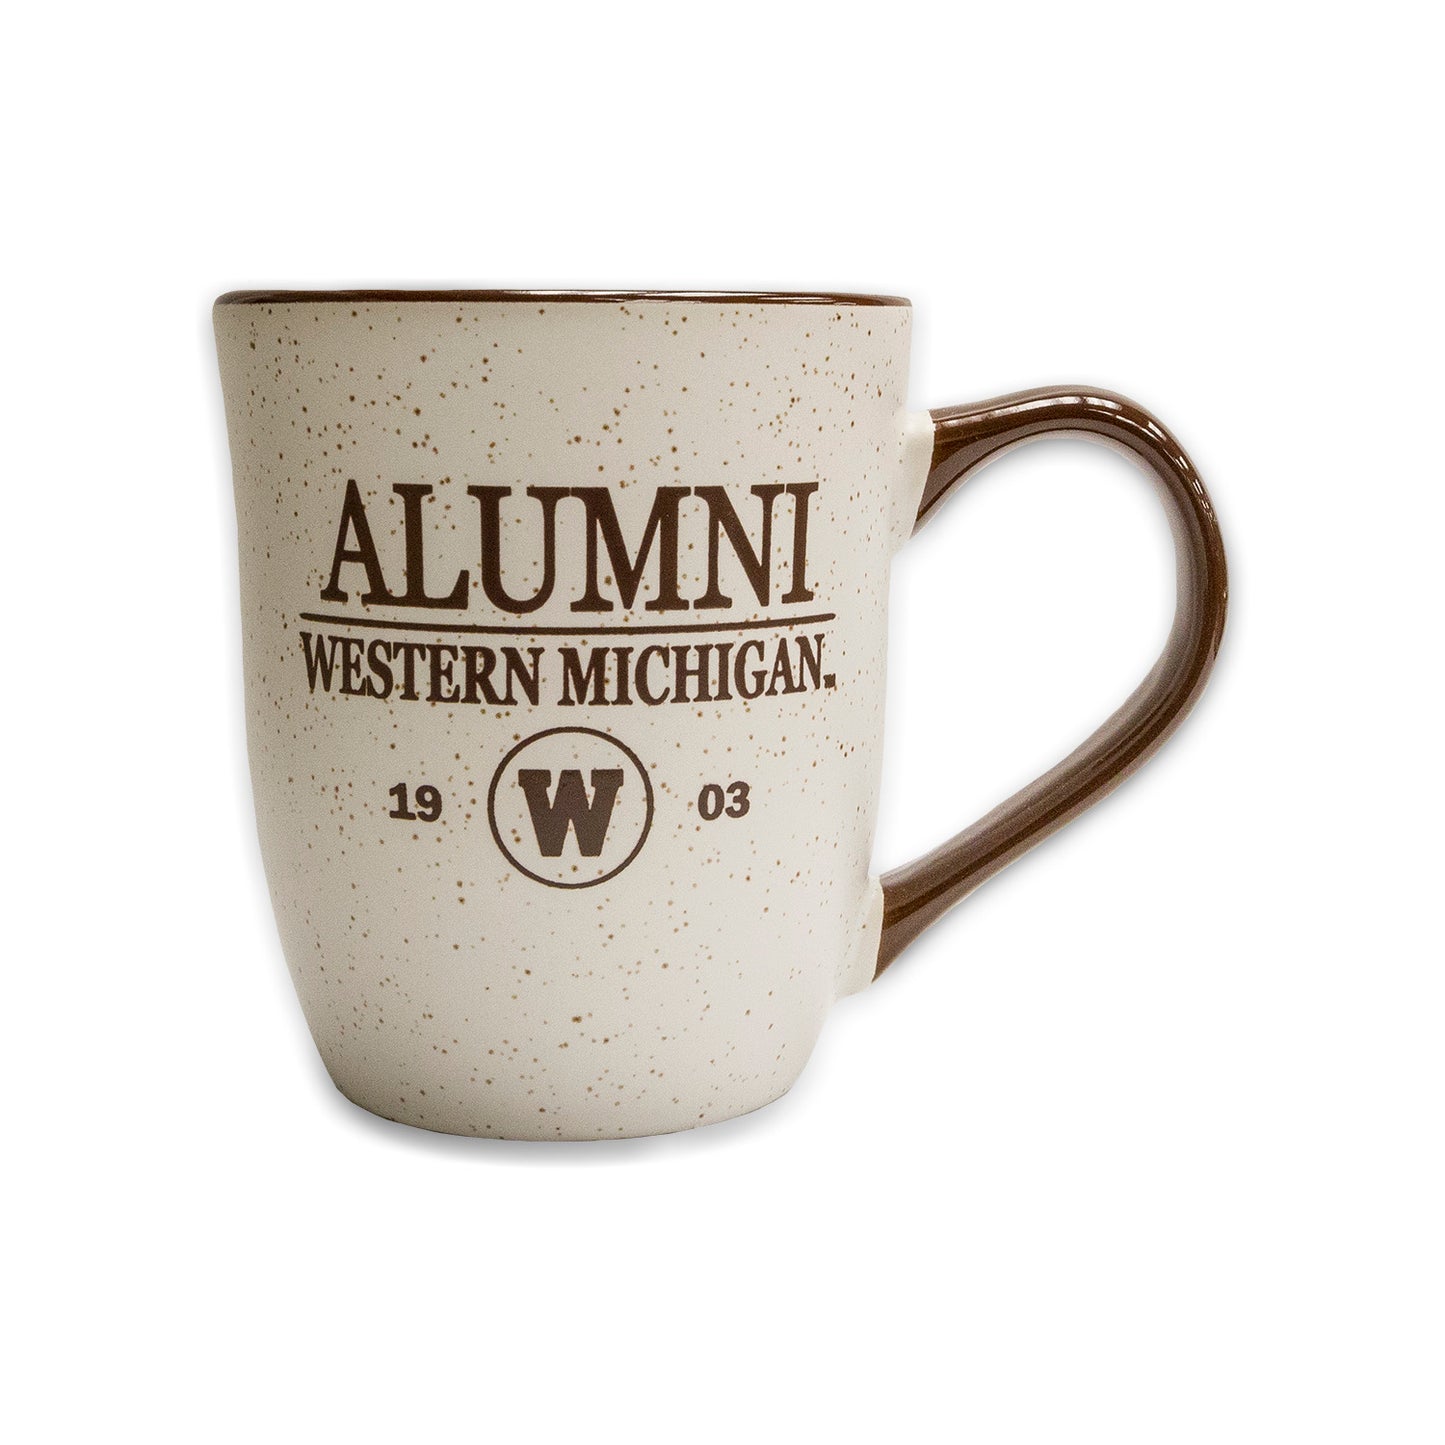 Western Michigan Alumni Mug